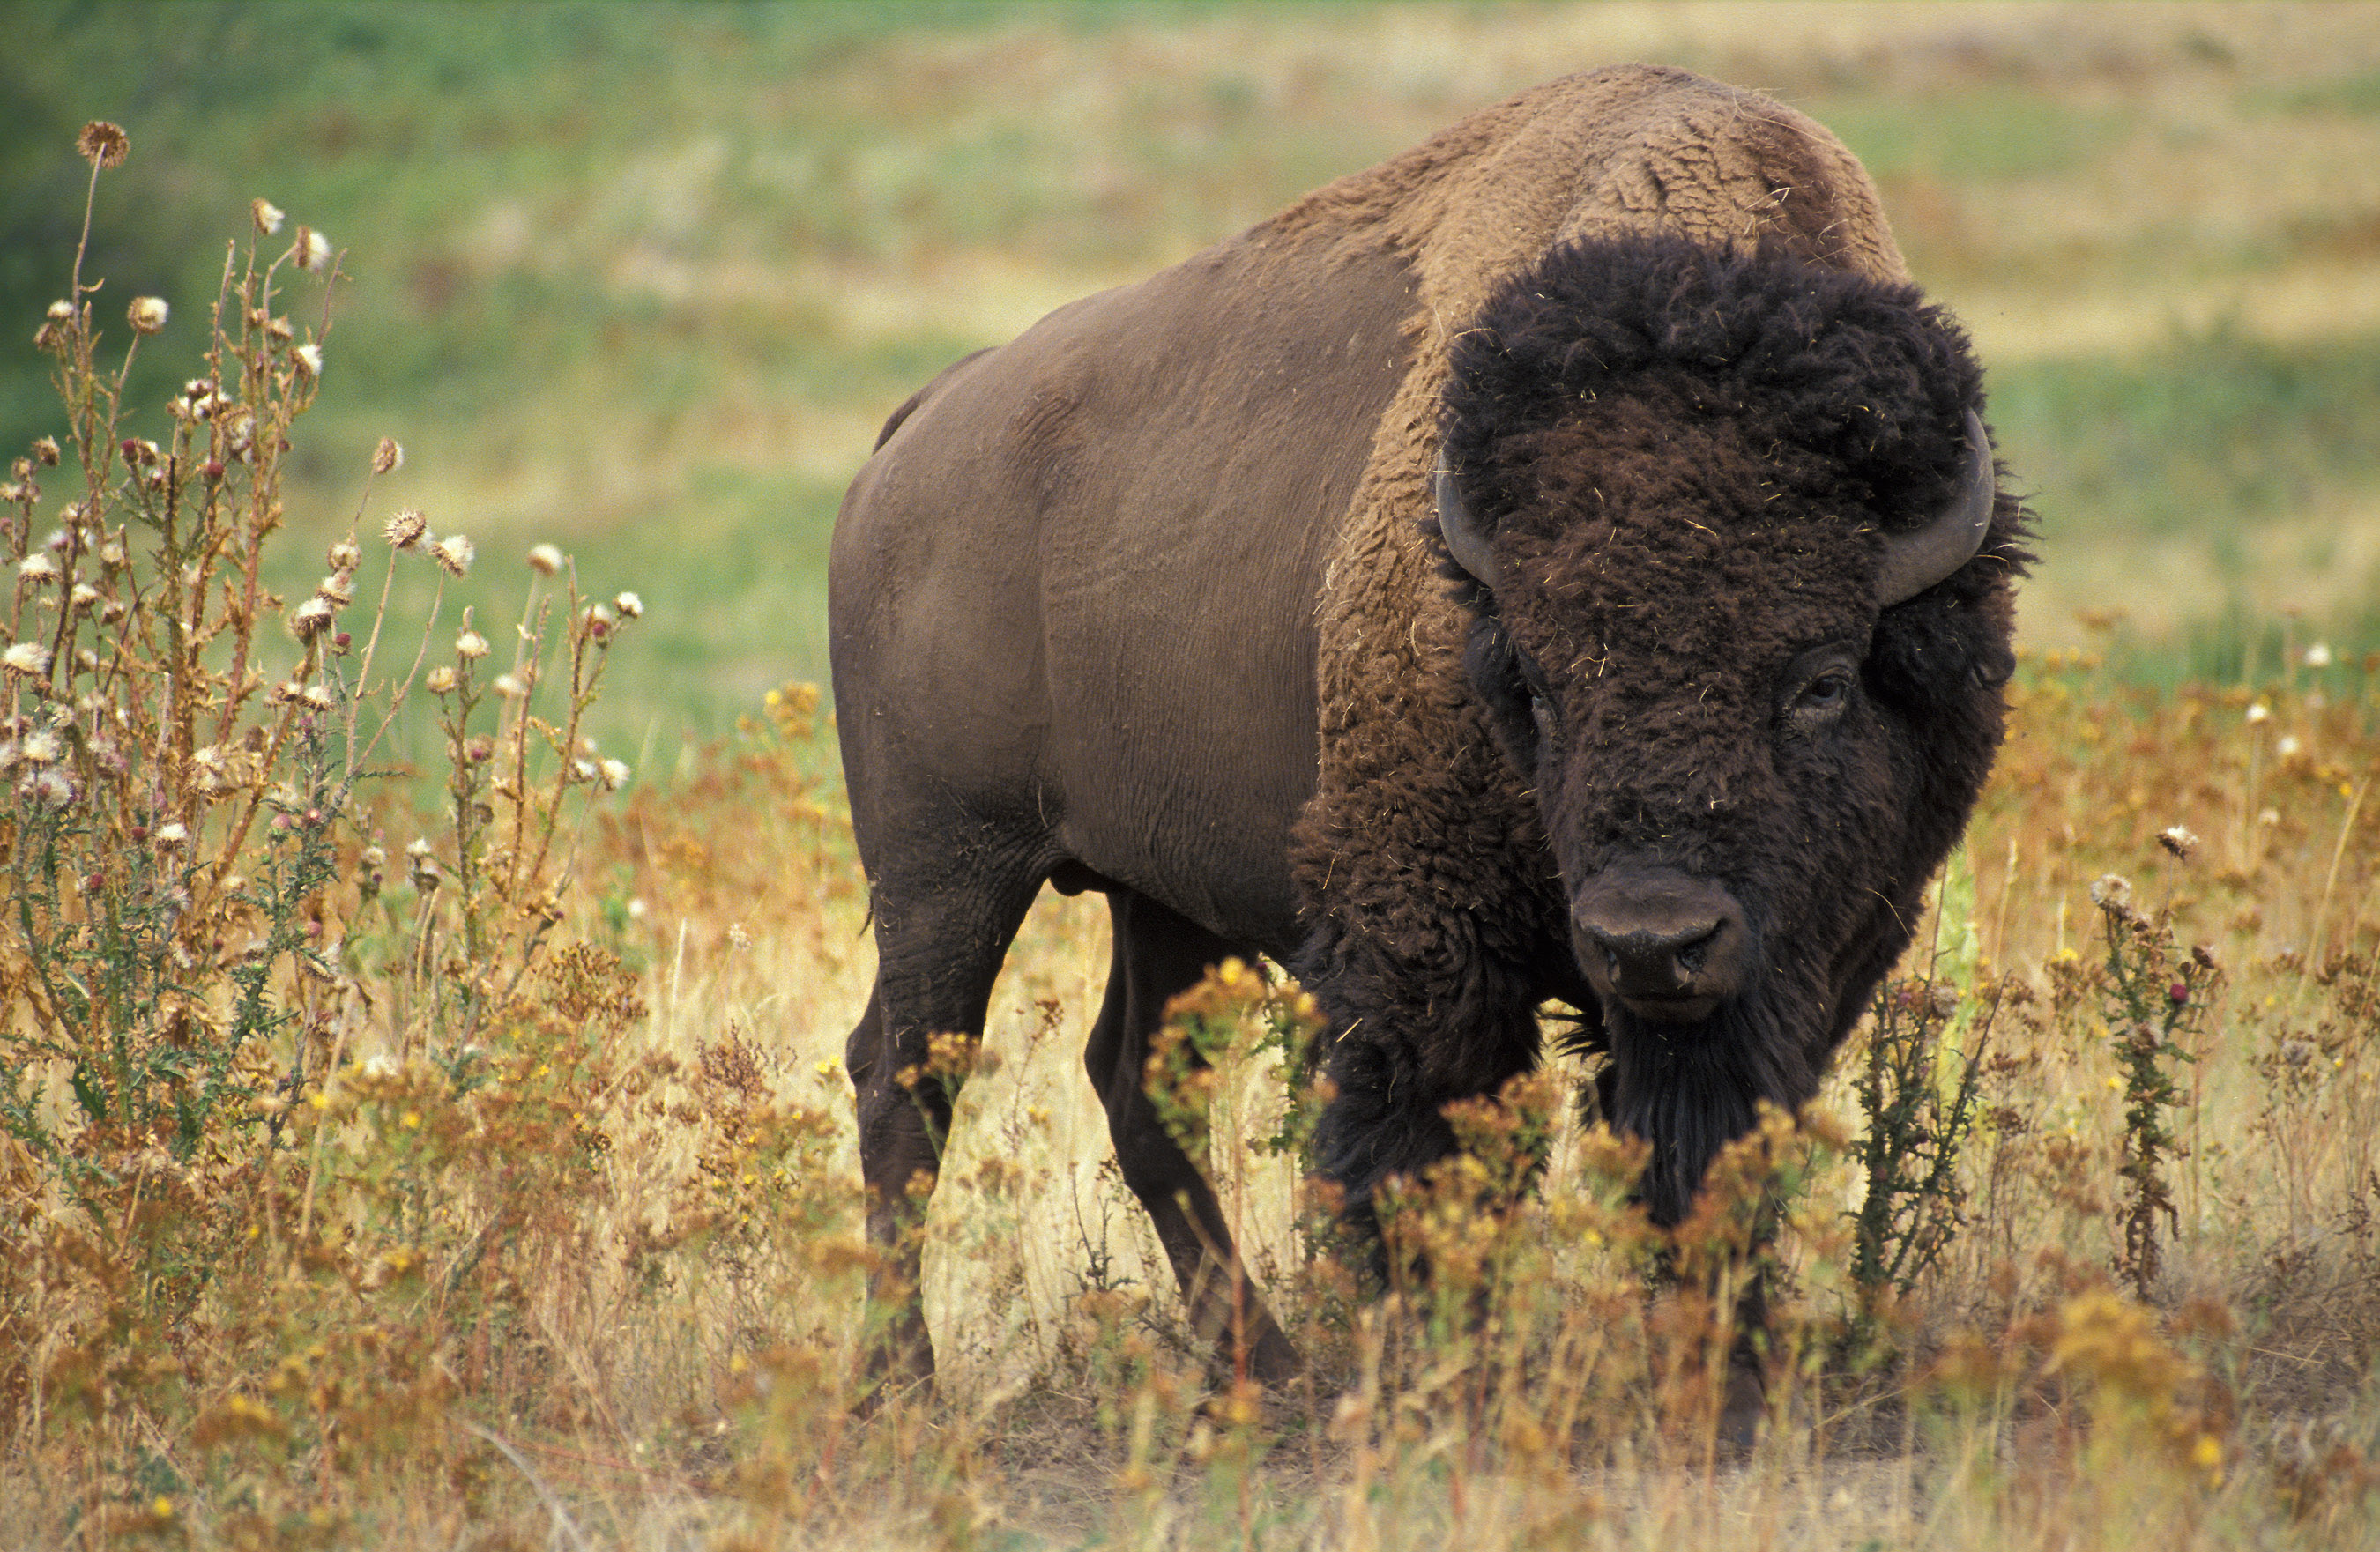 http://upload.wikimedia.org/wikipedia/commons/8/8d/American_bison_k5680-1.jpg